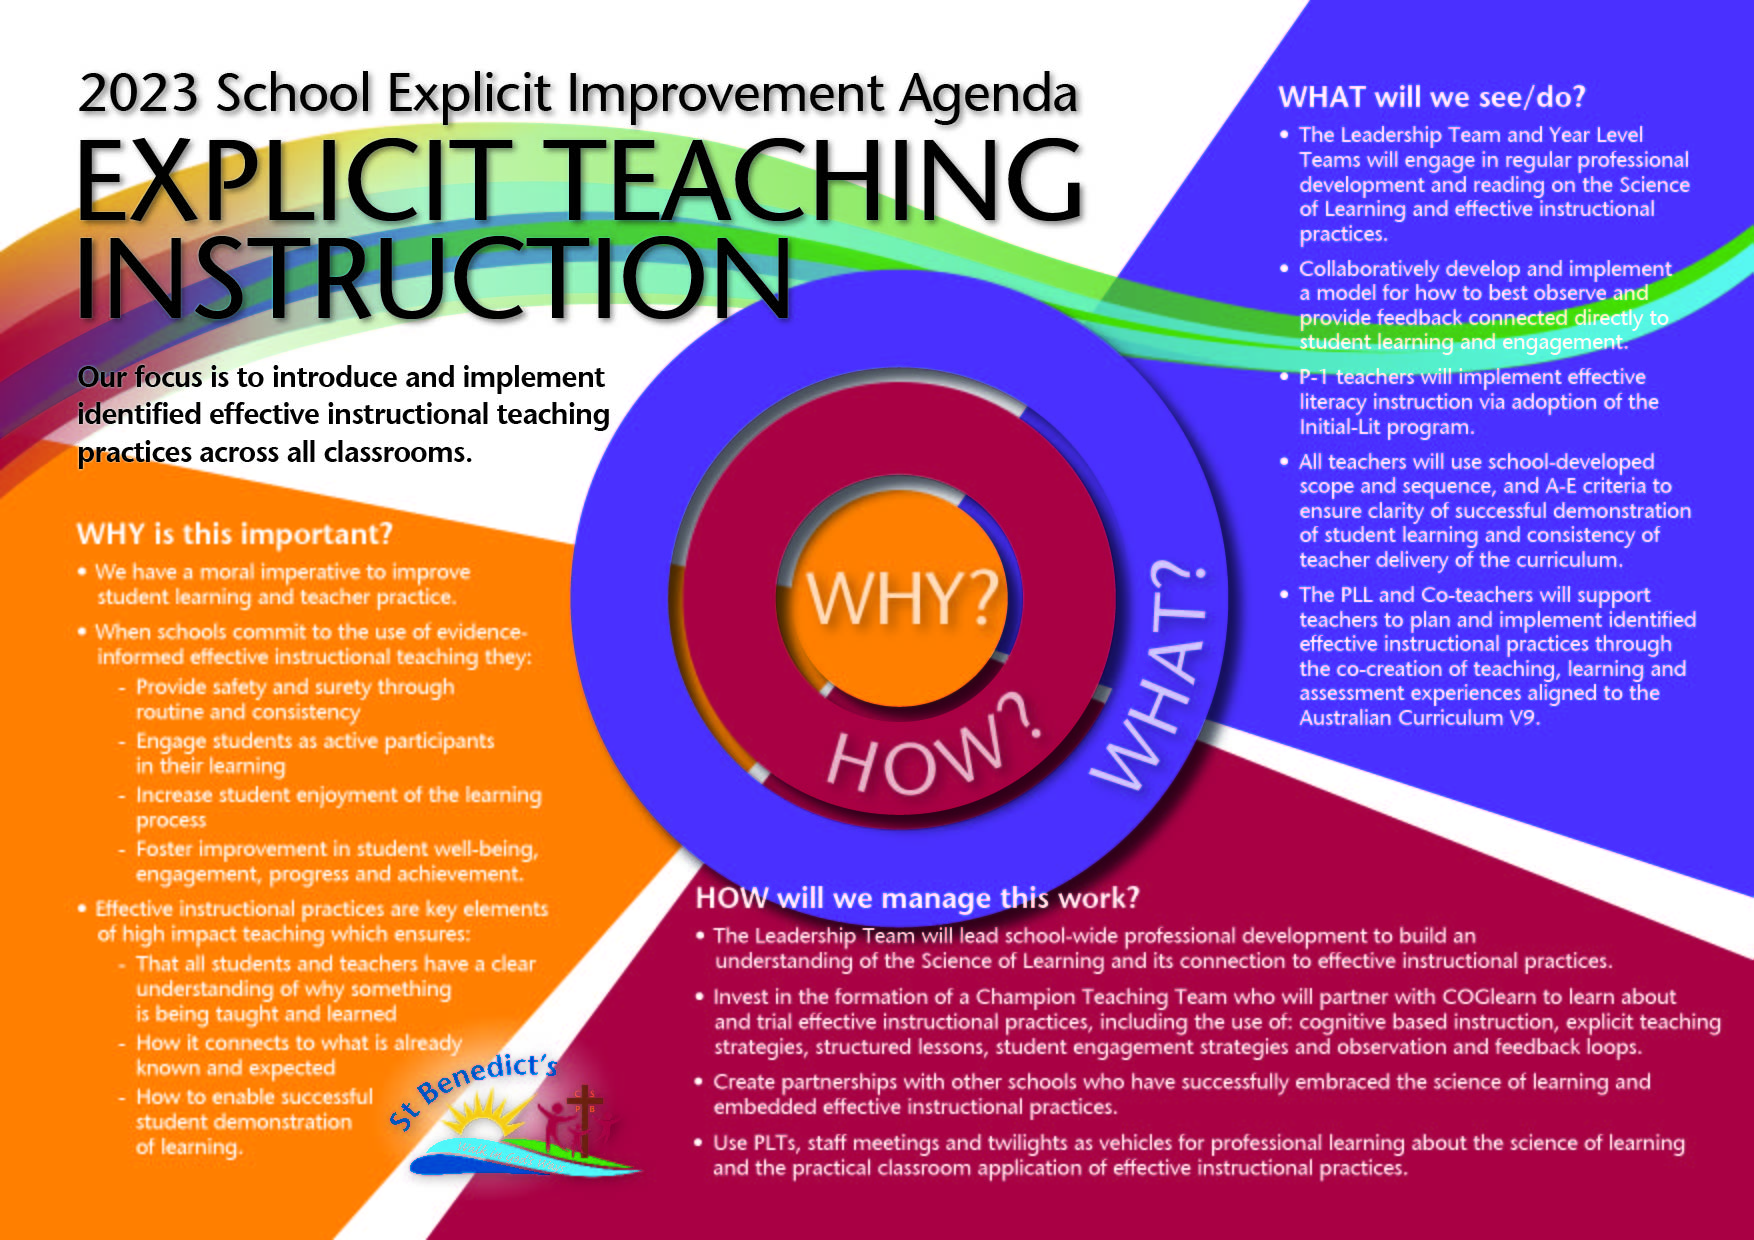 2023 School Explicit Improv Agenda.jpg